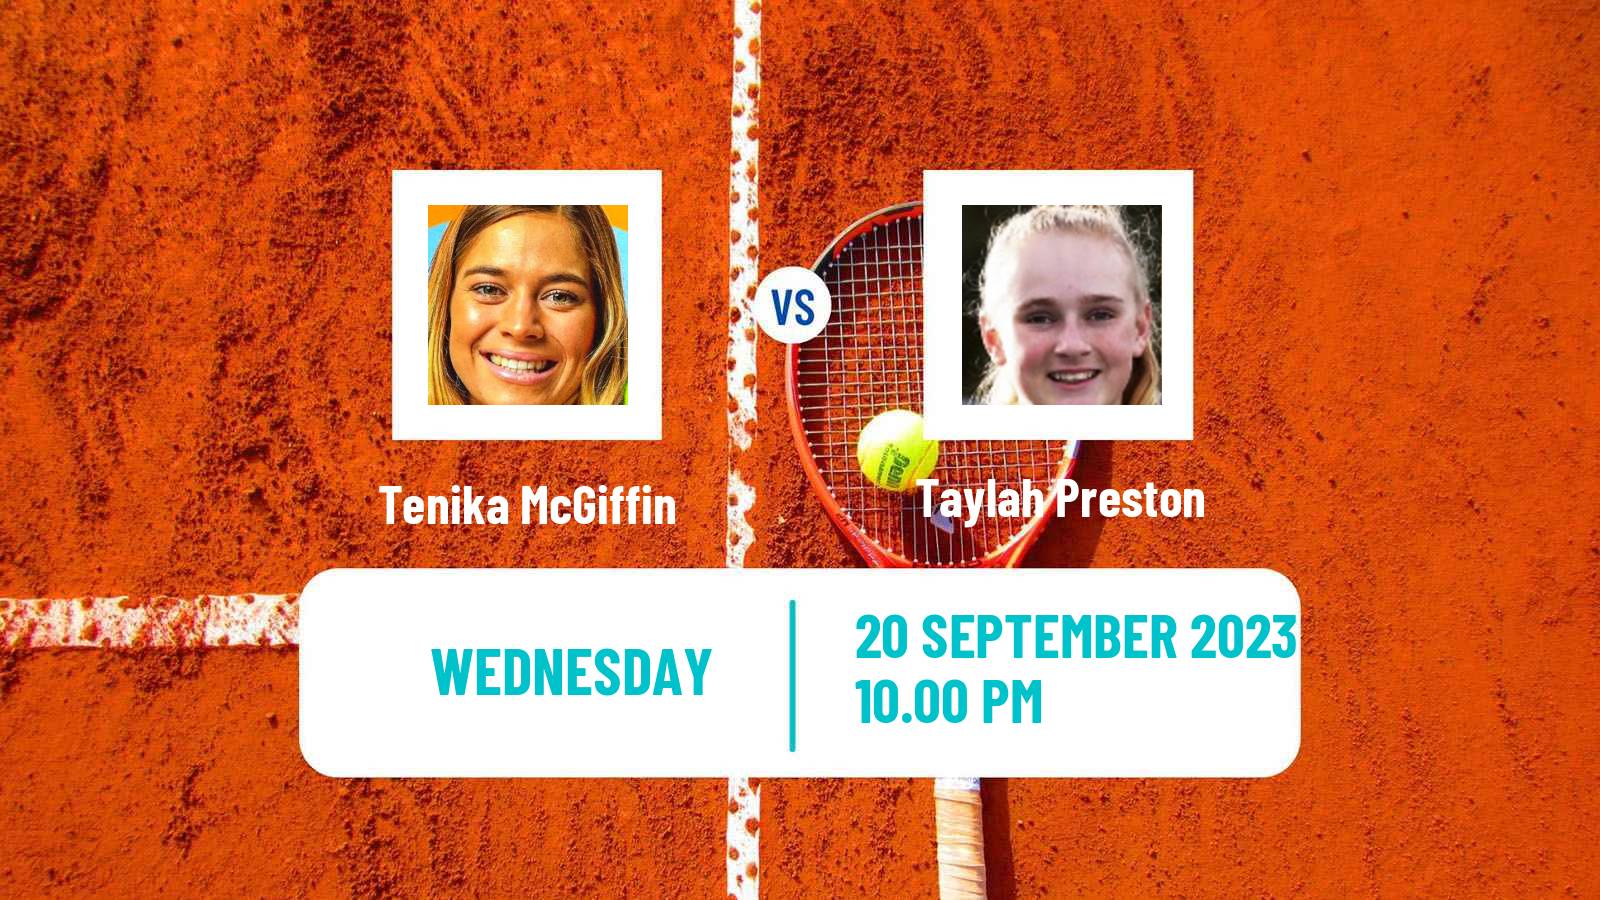 Tennis ITF W25 Perth 2 Women Tenika McGiffin - Taylah Preston